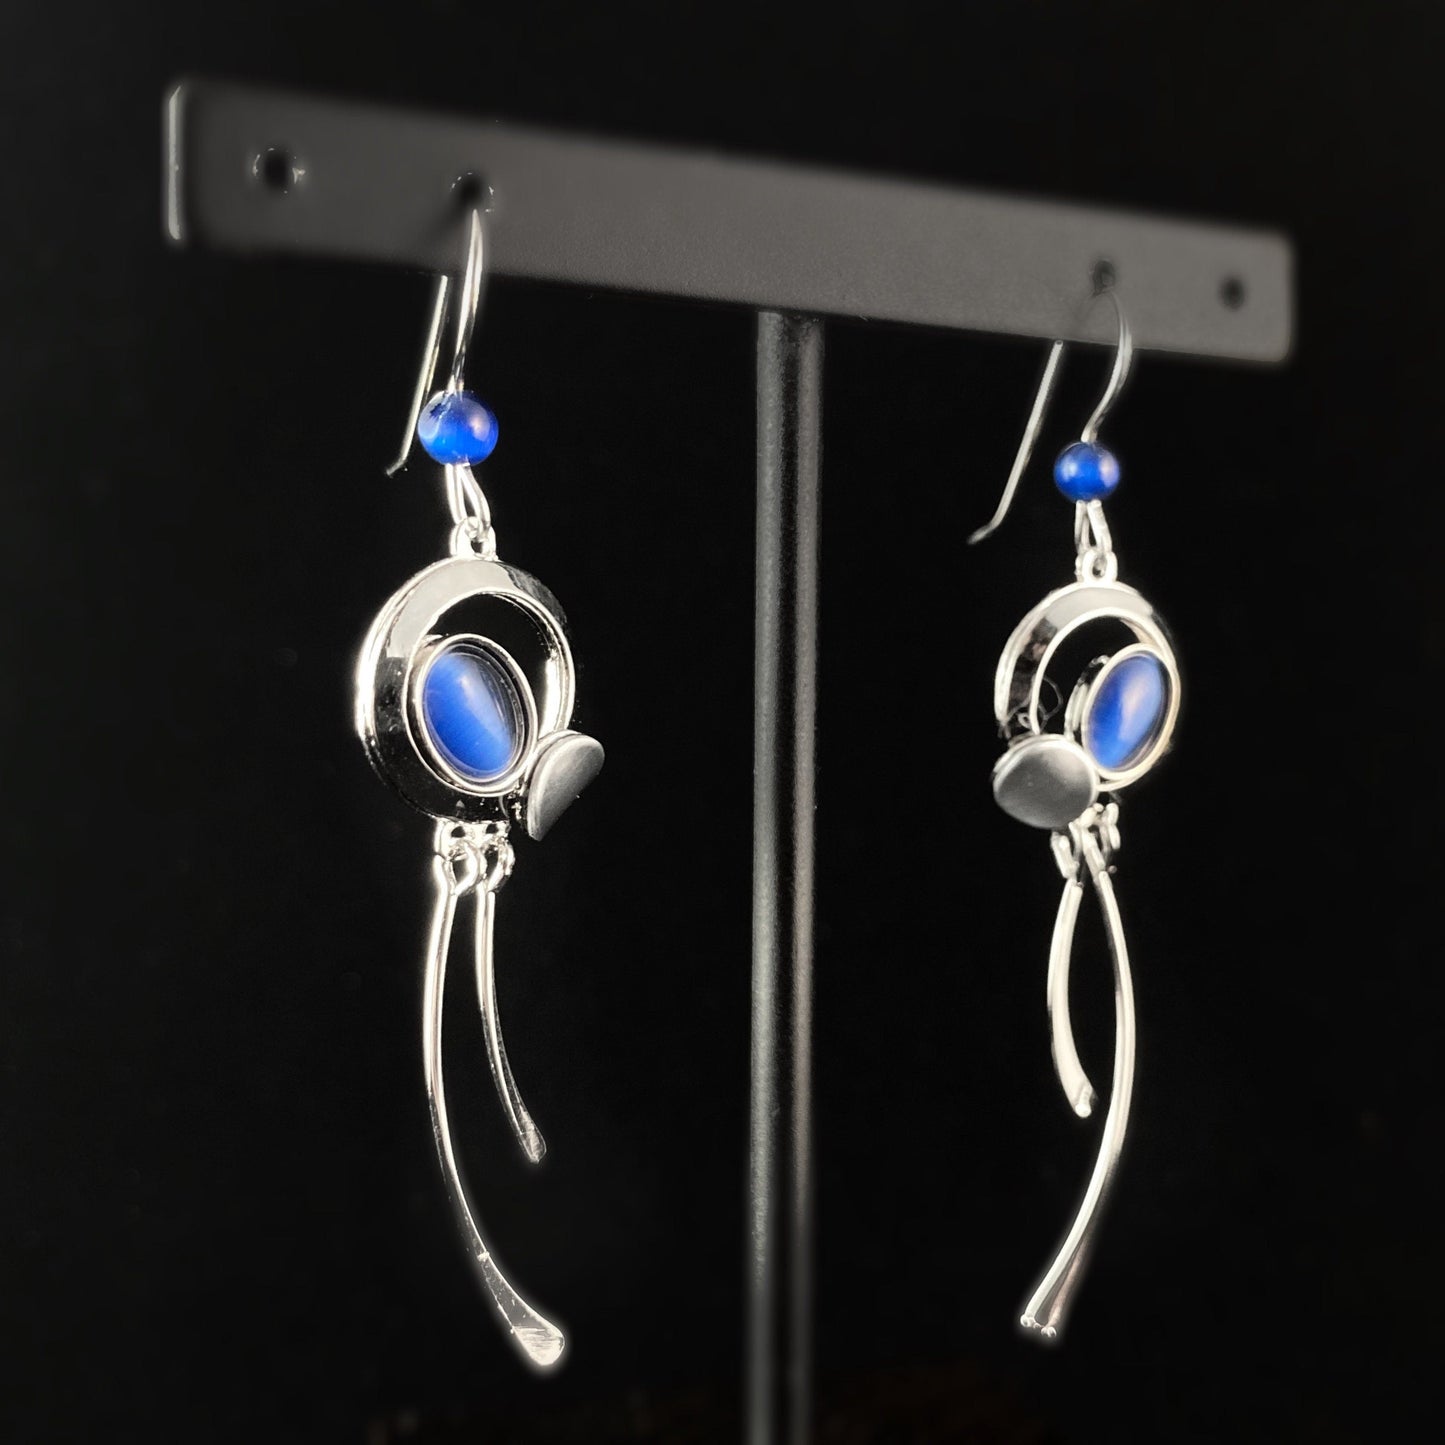 Lightweight Handmade Geometric Aluminum Earrings, Silver and Blue Circles